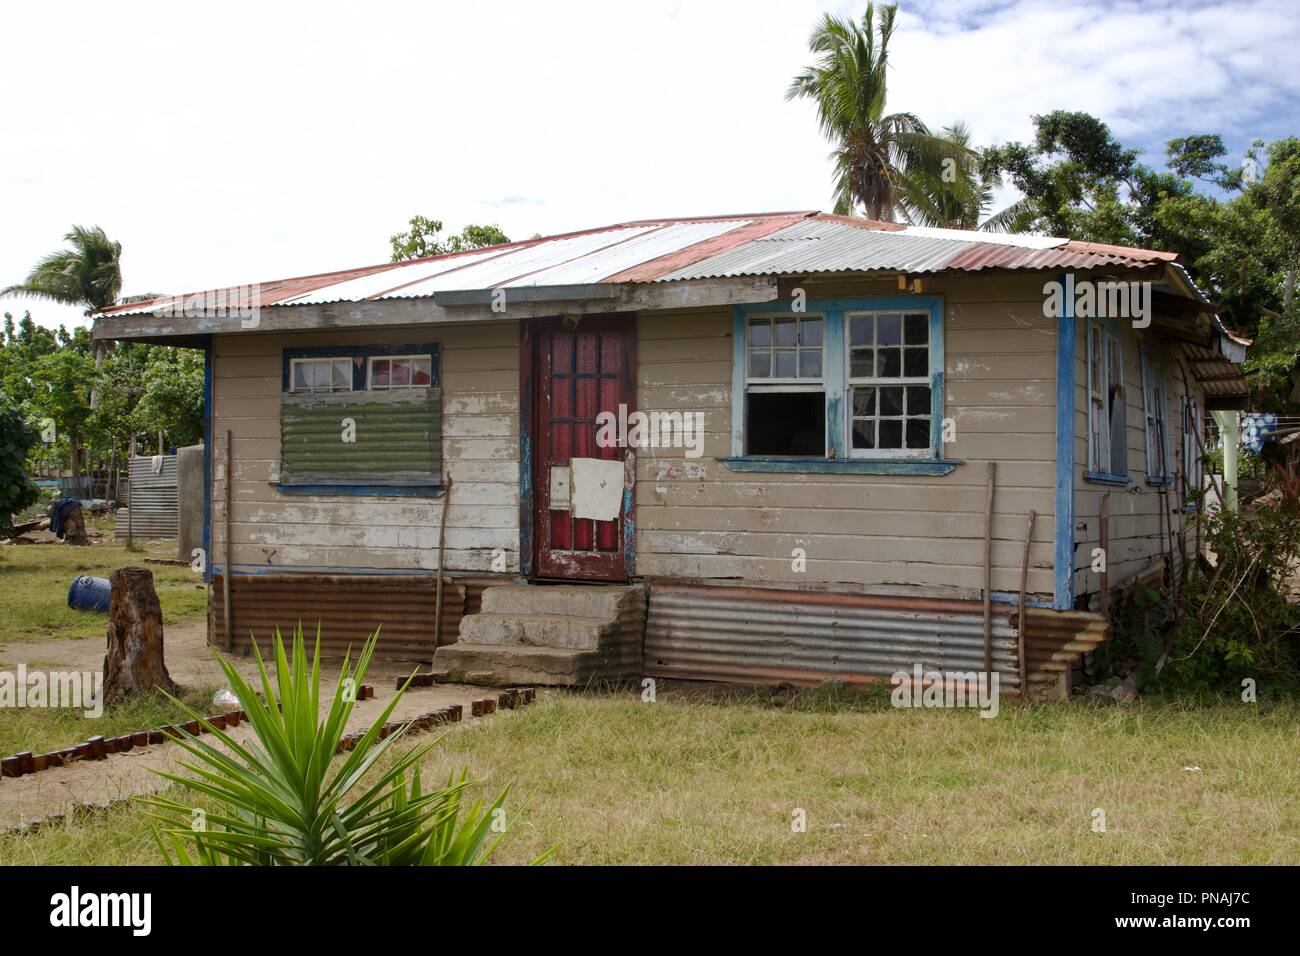 A family house with a corrugated roof inside a Tongan village on Atata Island, Kingdom of Tonga Stock Photo